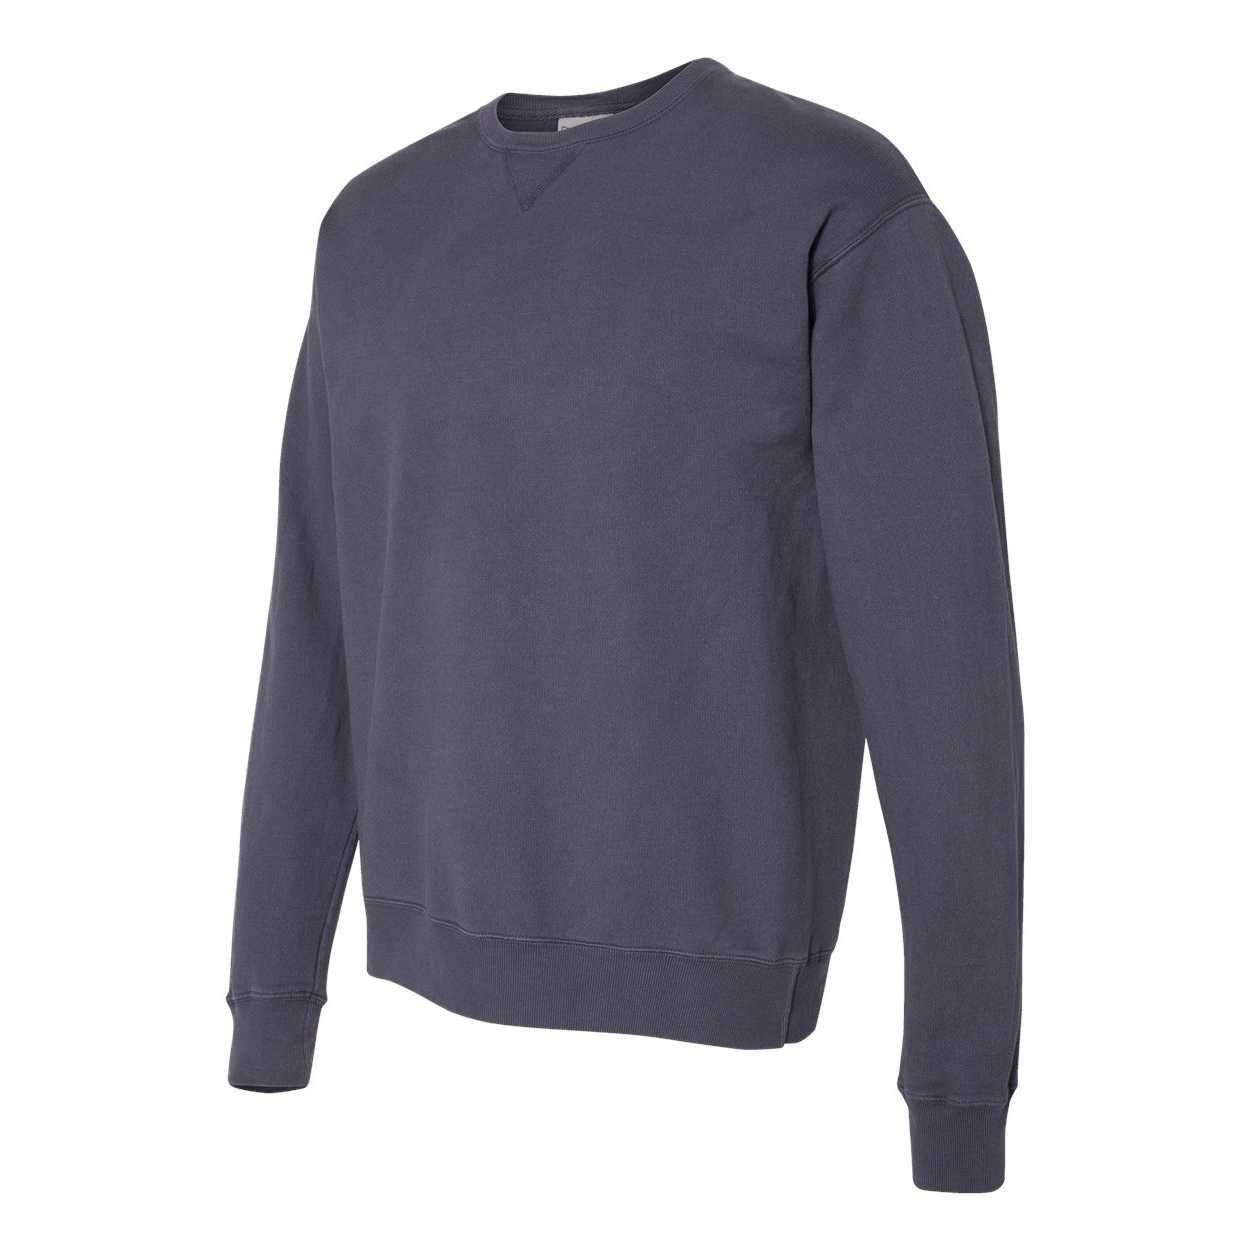 Loparex ComfortWash by Hanes - Garment Dyed Crewneck Sweatshirt